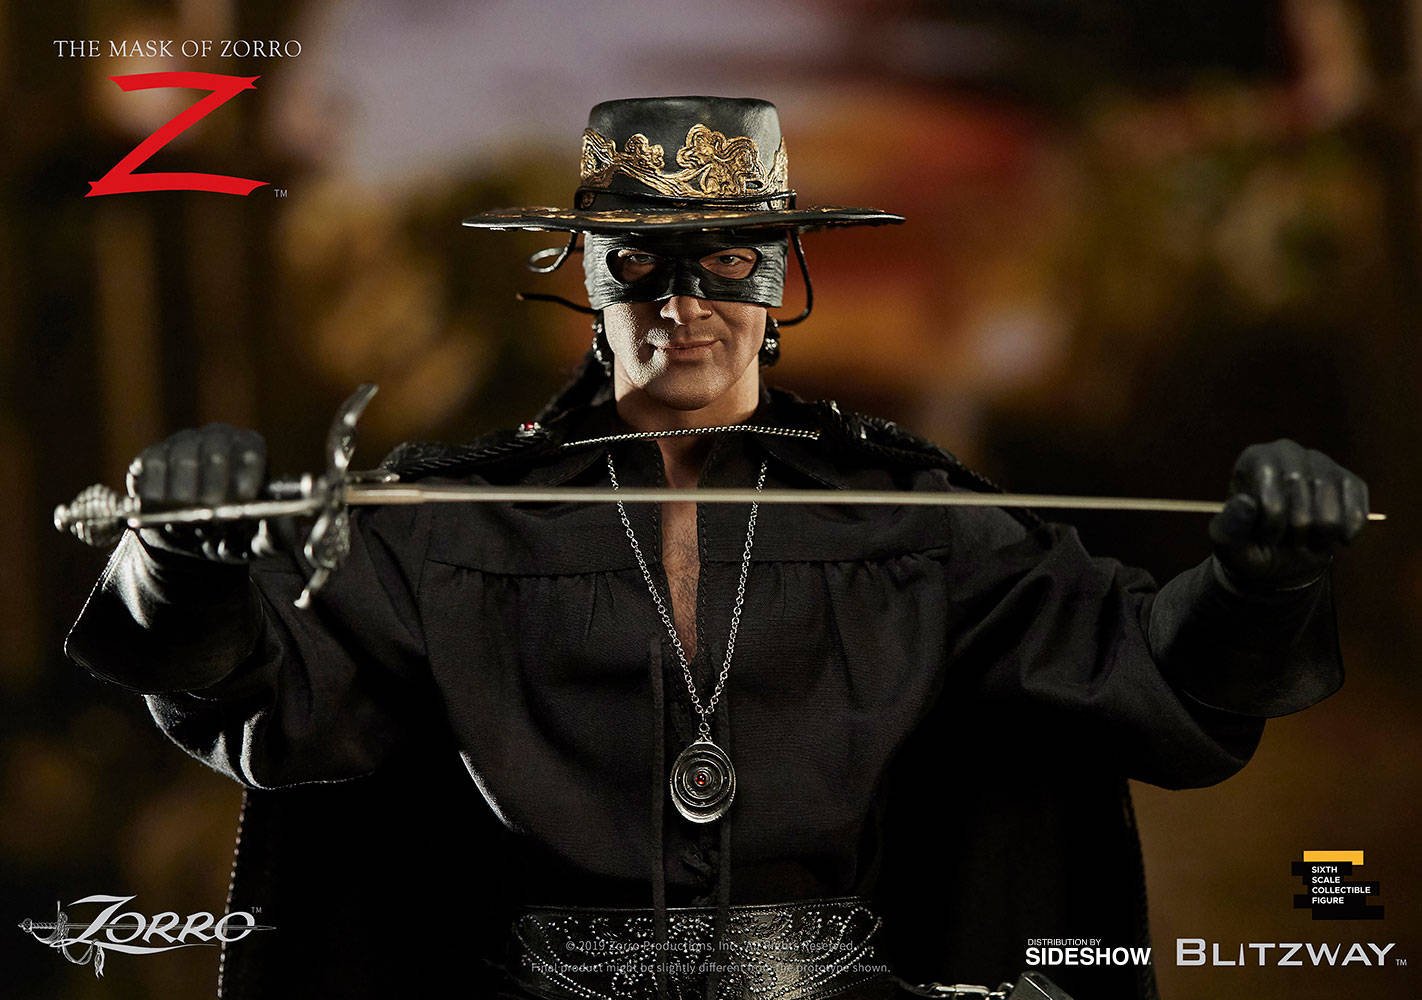 Immagine di Zorro, da Blitzway una figure in scala 1/6